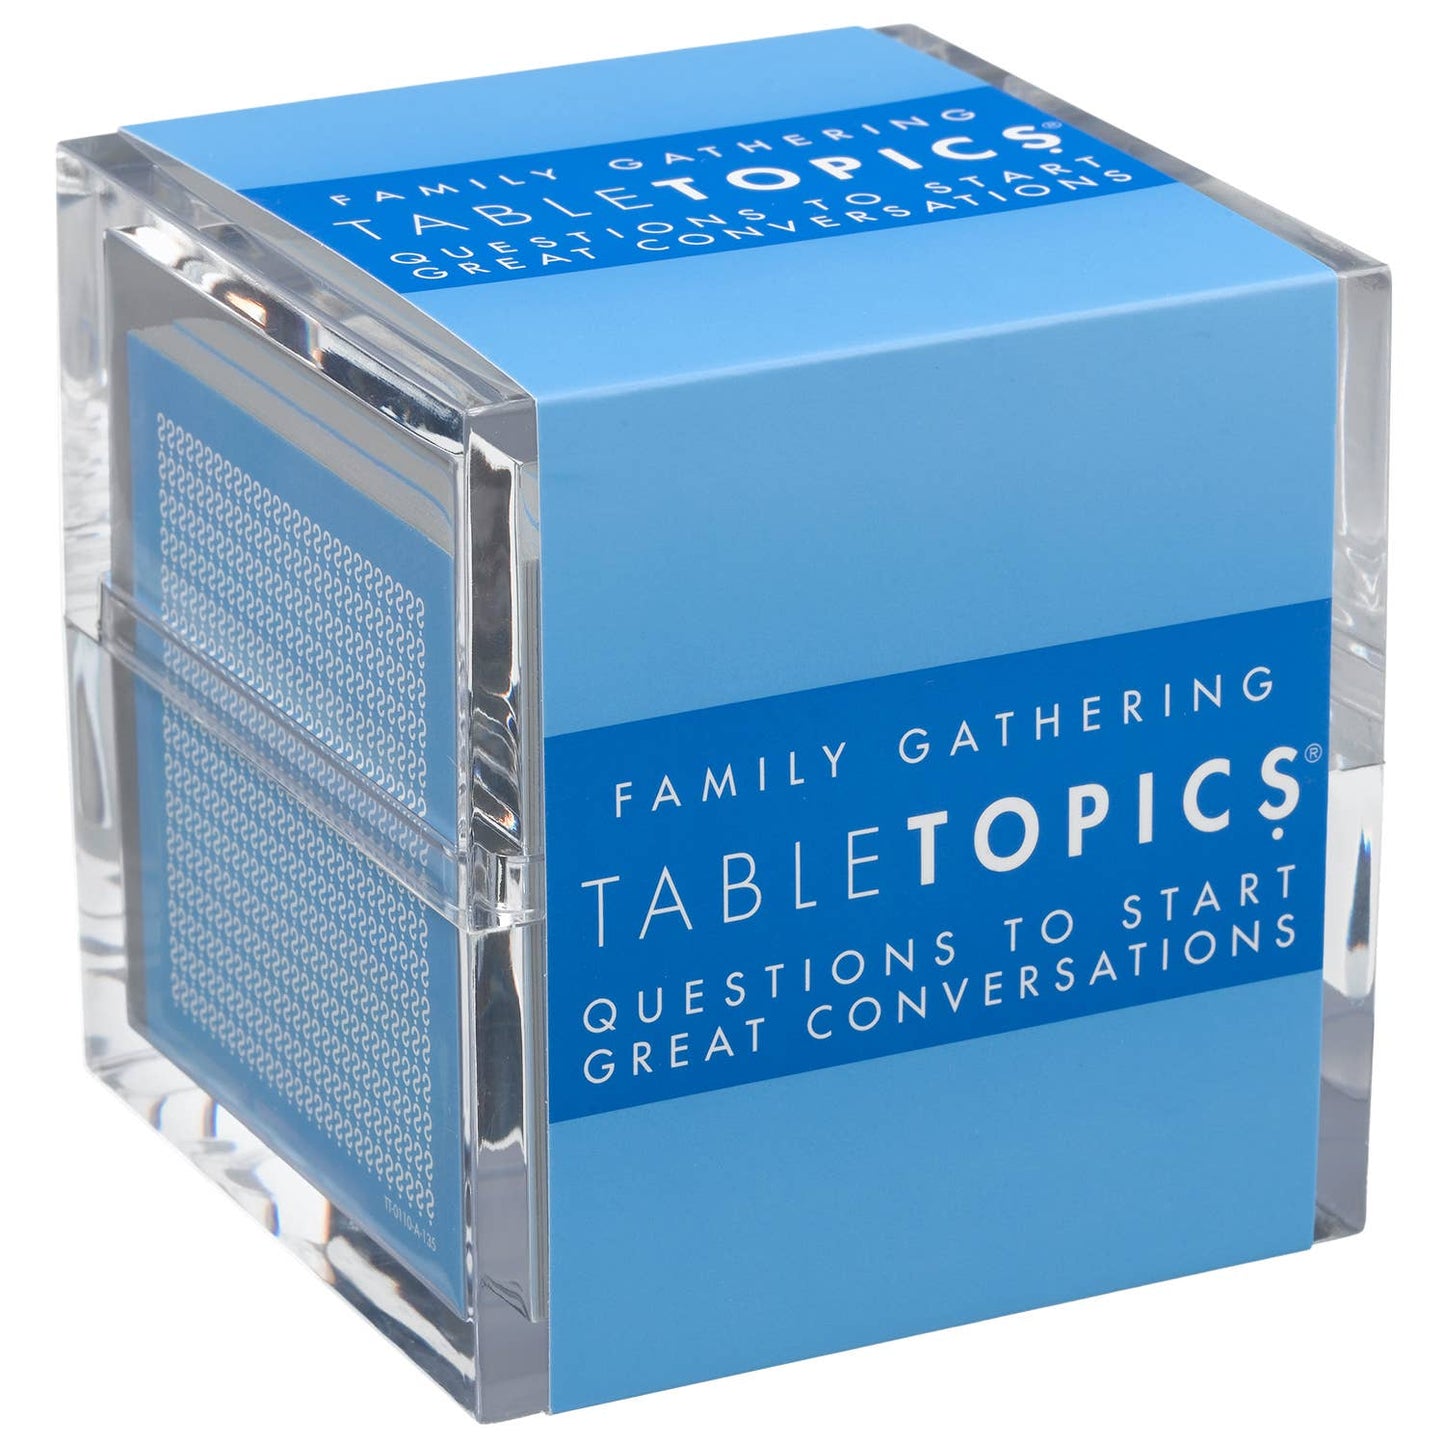 Table Topics: Family Gathering